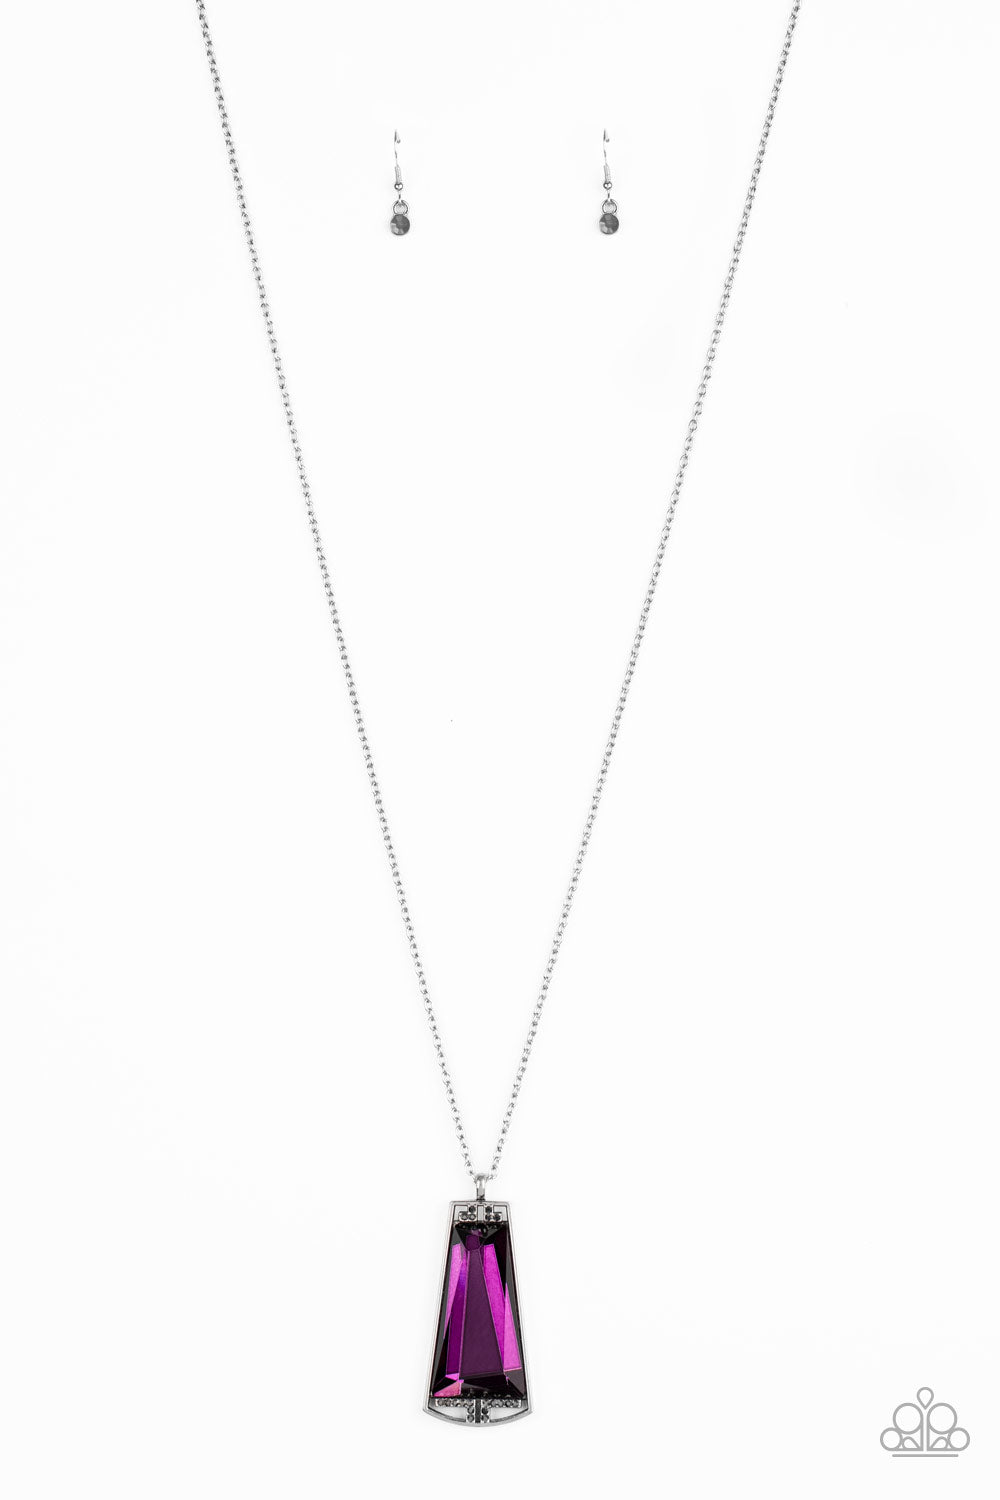 Paparazzi Necklaces - Empire State Elegance - Purple